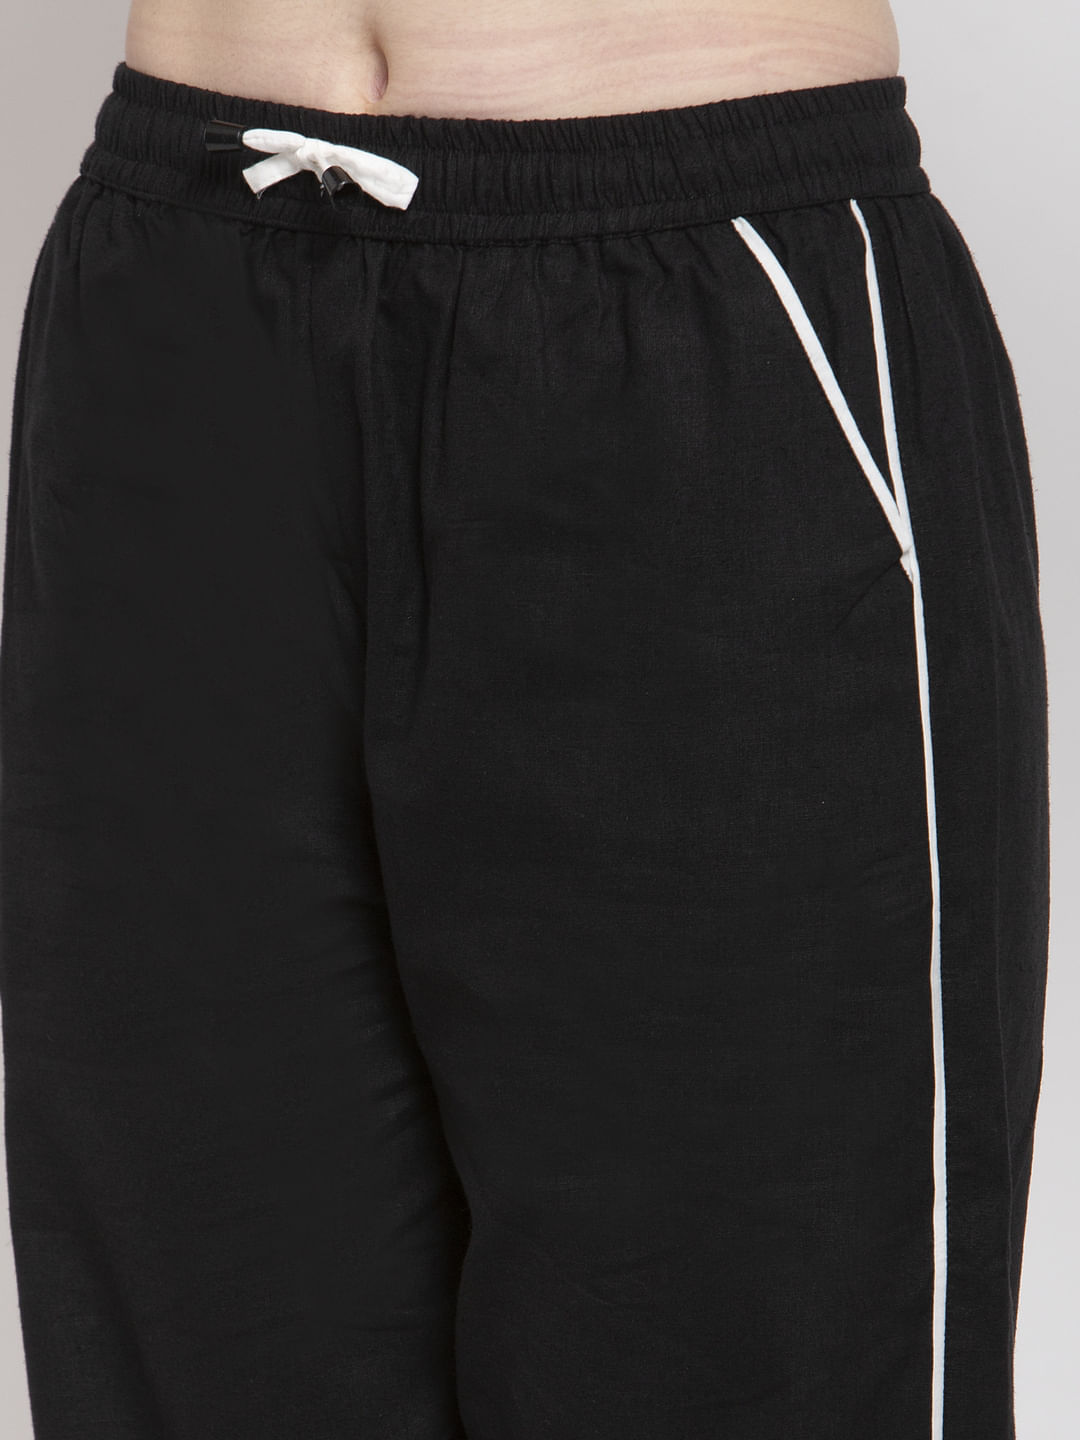 Secret Wish Women's Black Cotton Solid Nightsuit 